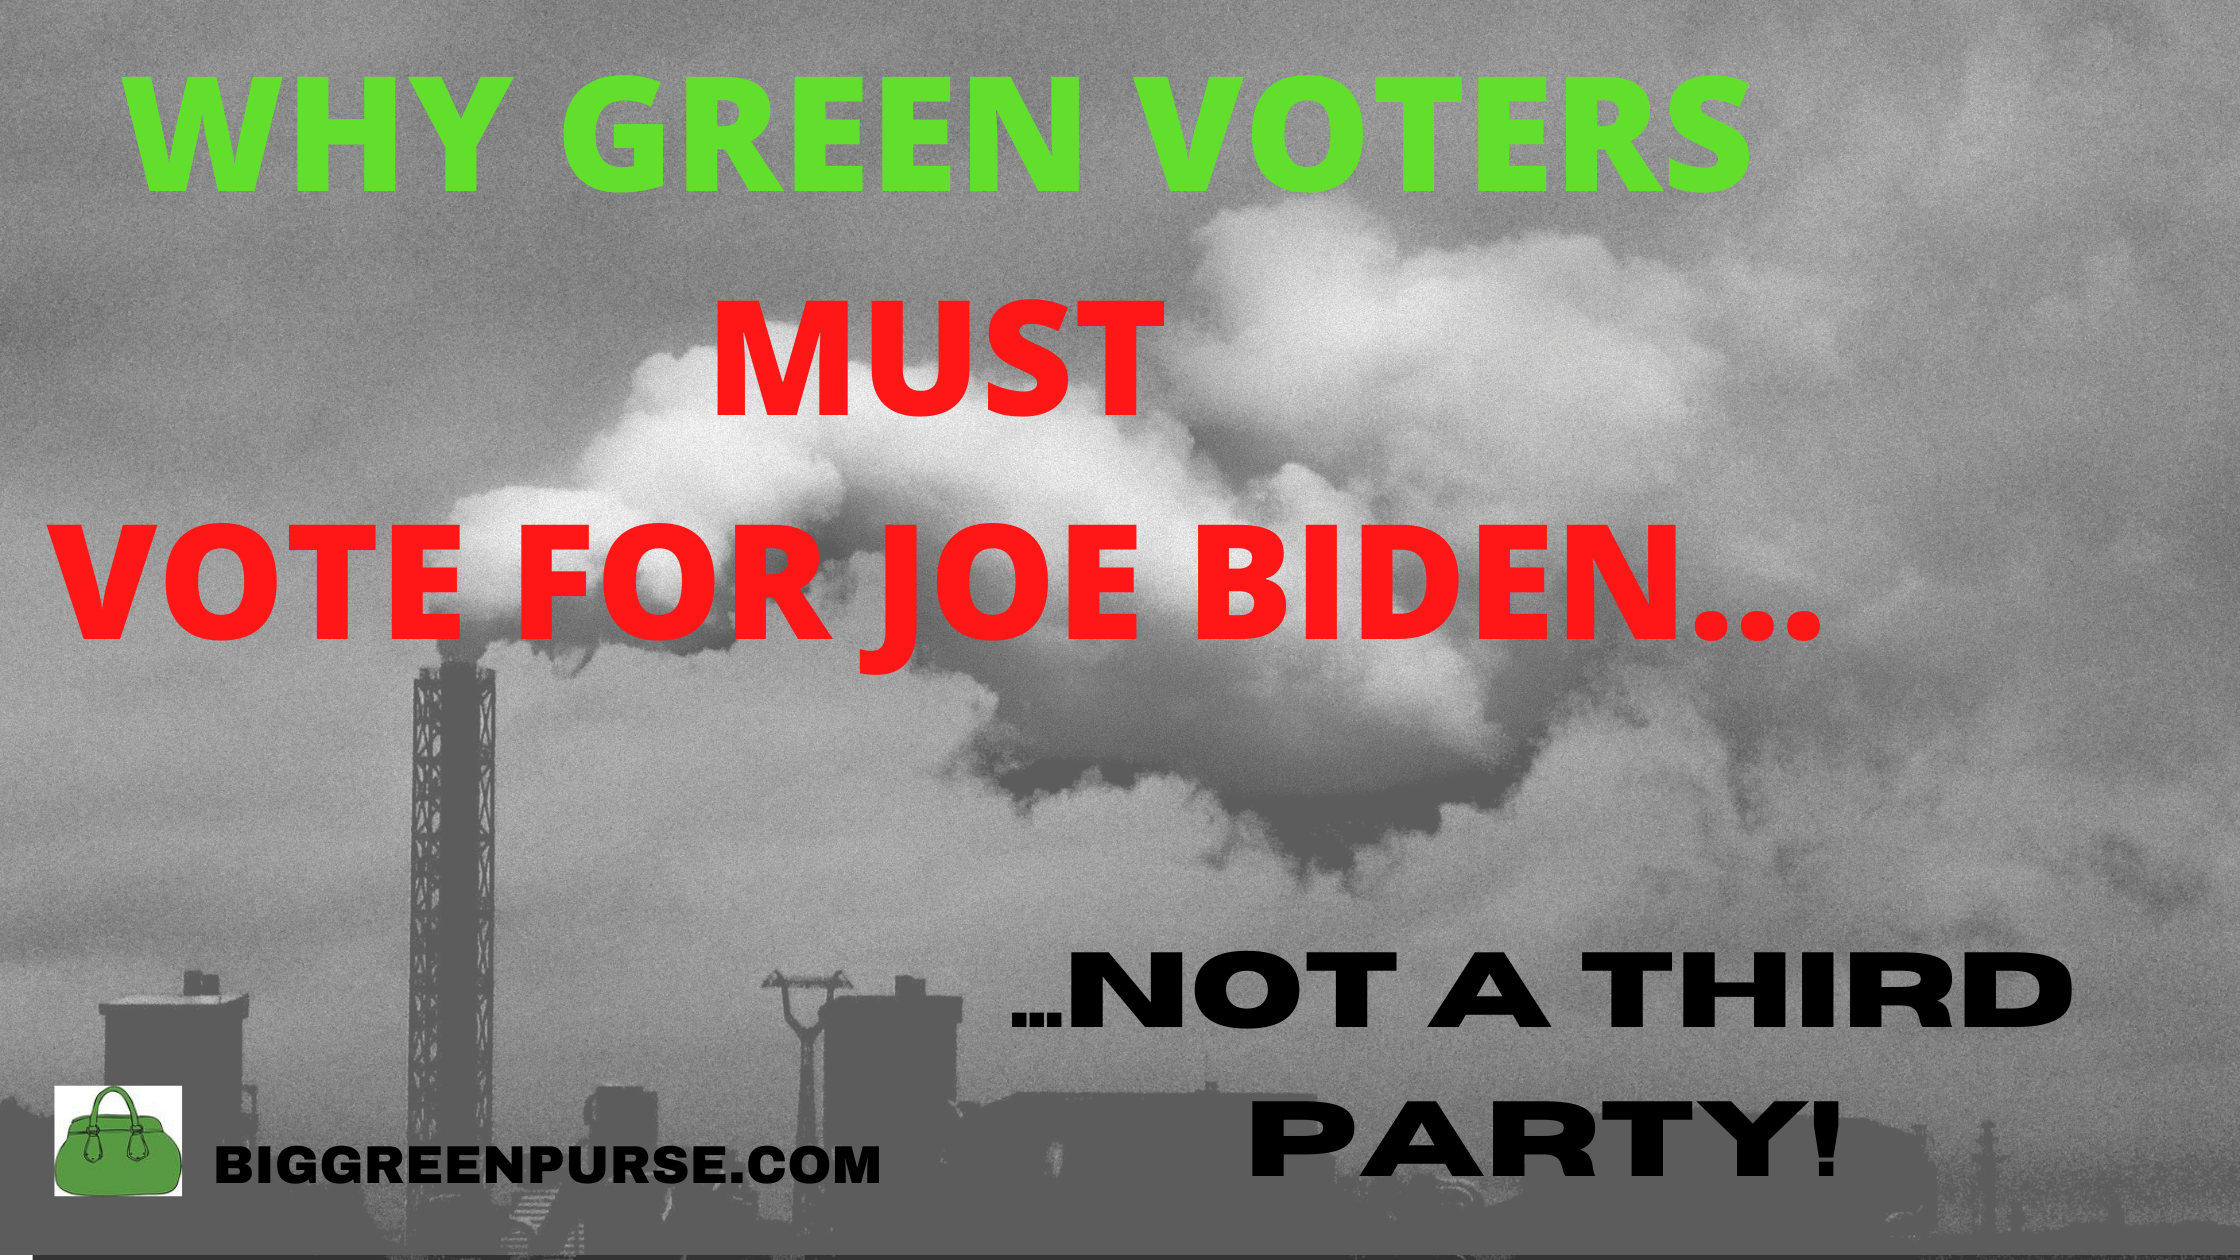 Banner explains that Green Voters Must Vote for Joe Biden